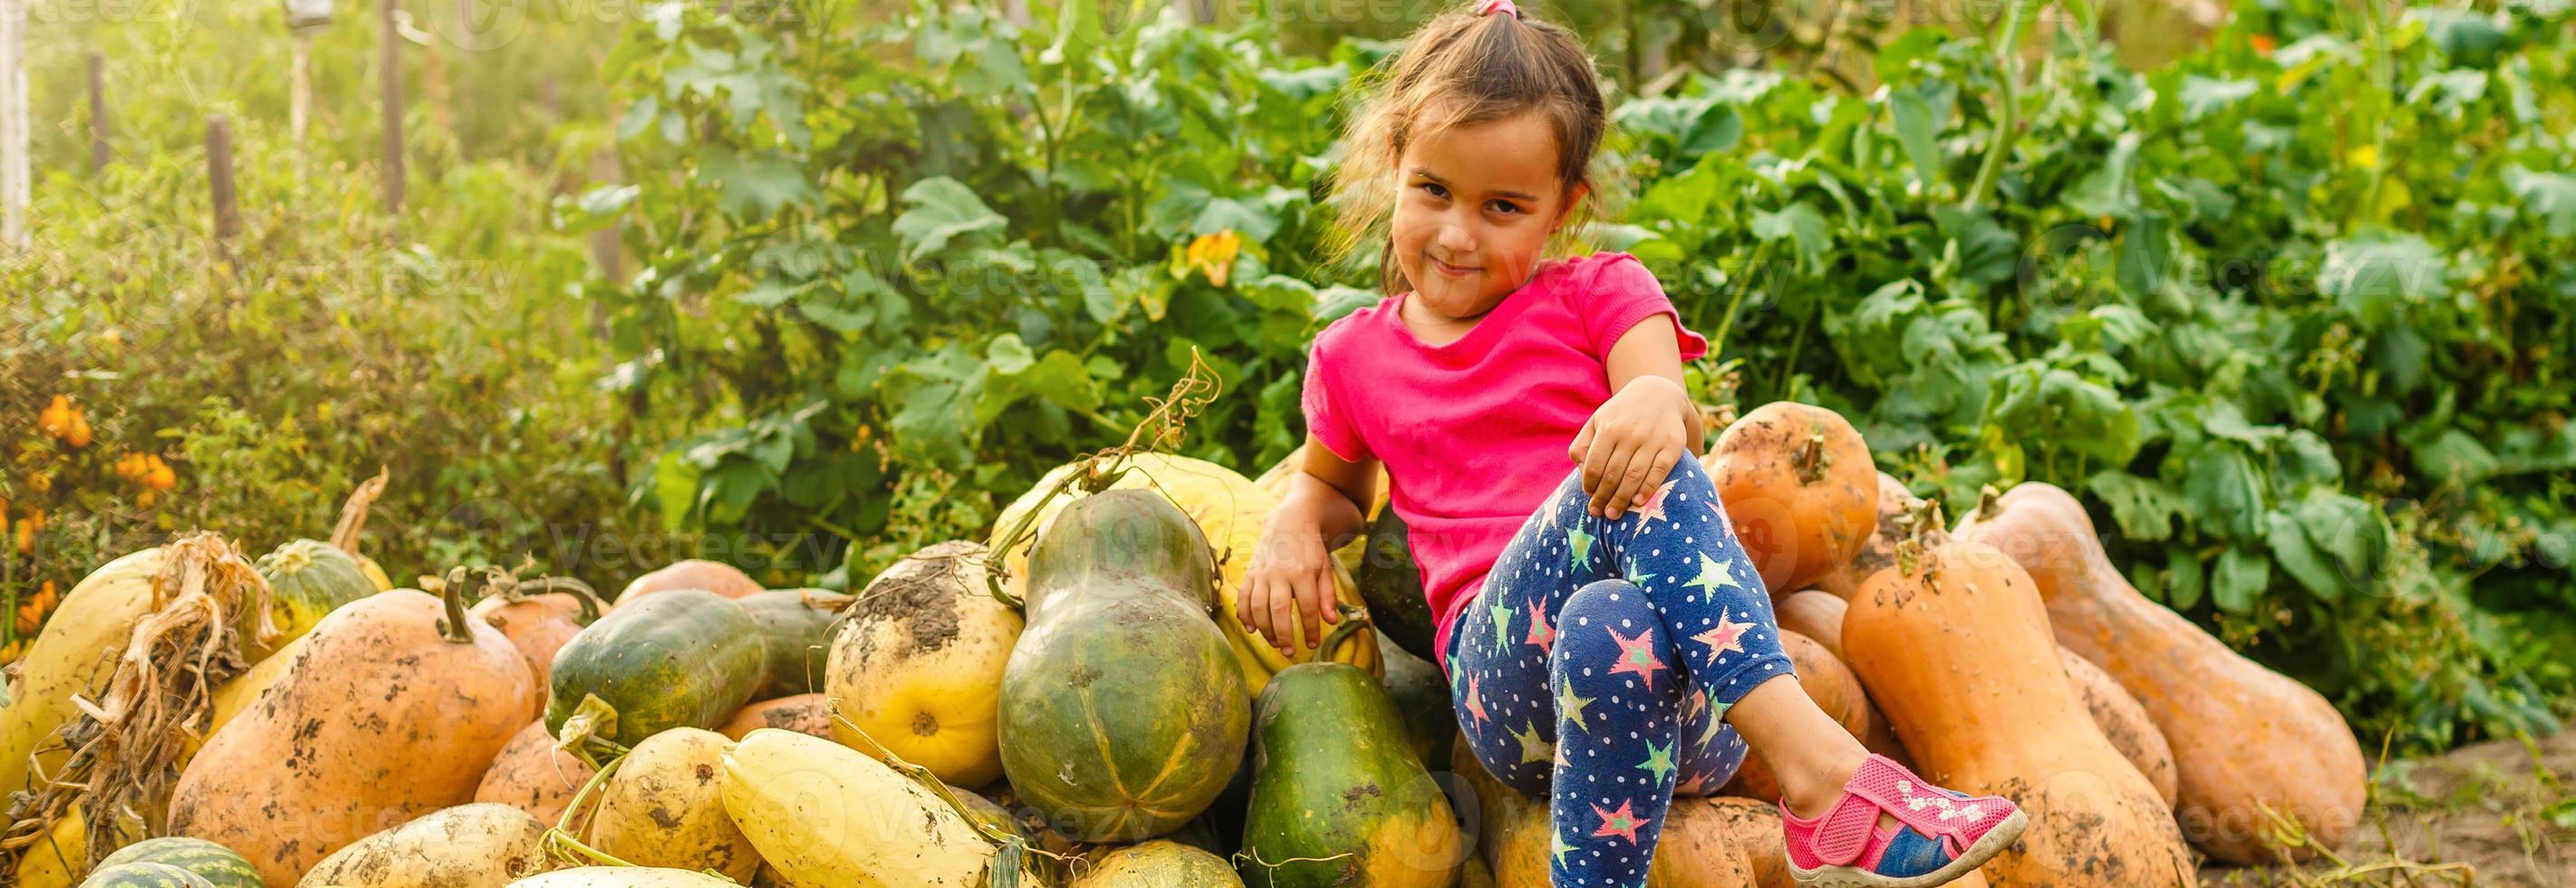 Little girl with pumpkin outdoor having fun in autumn park. photo